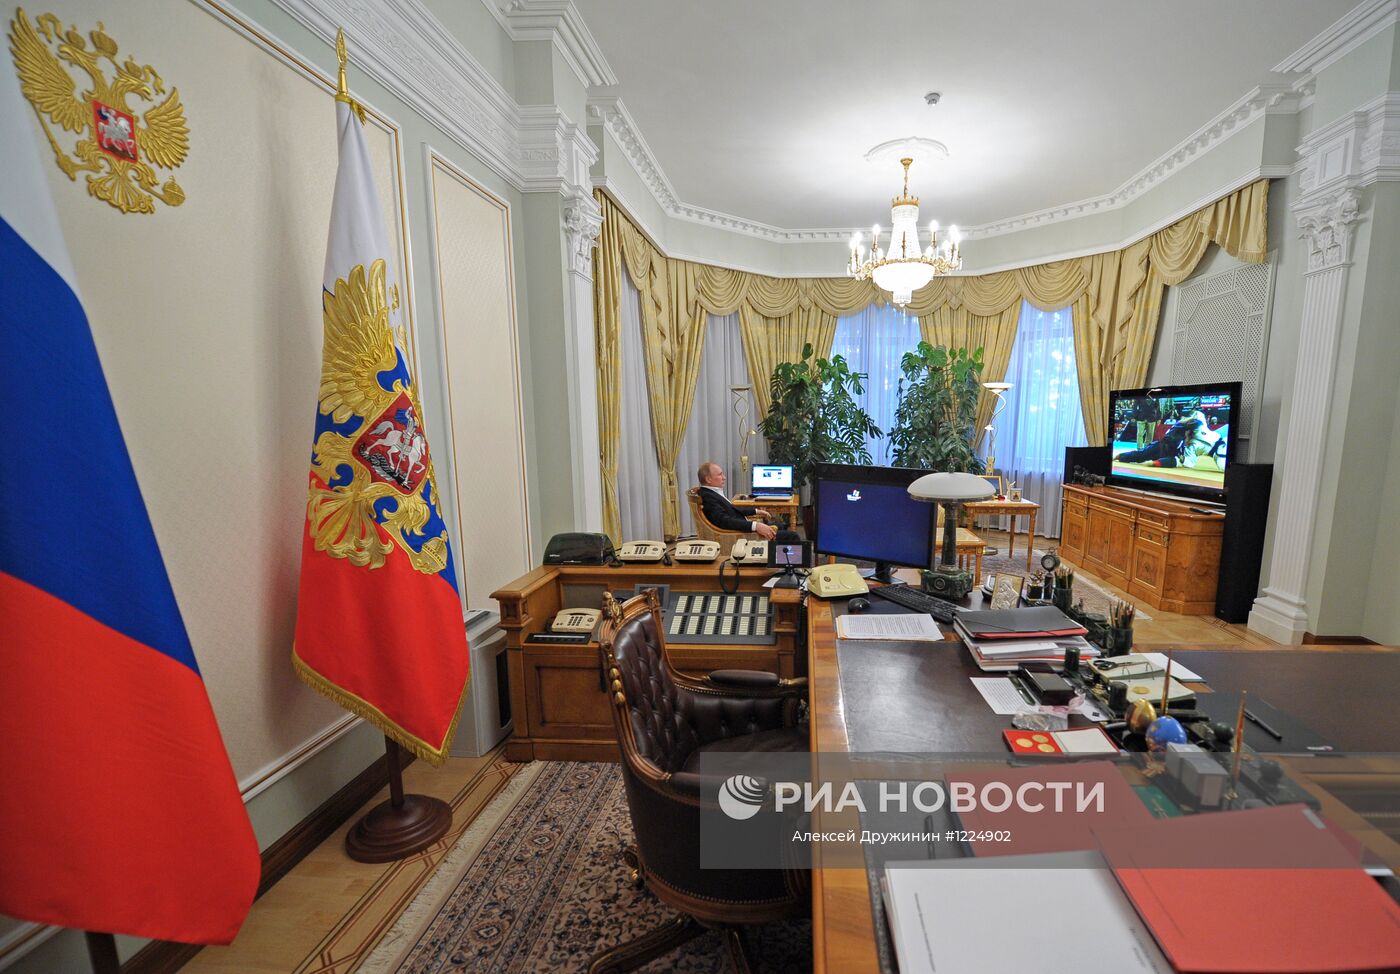 Резиденция президента России в Ново Огарево